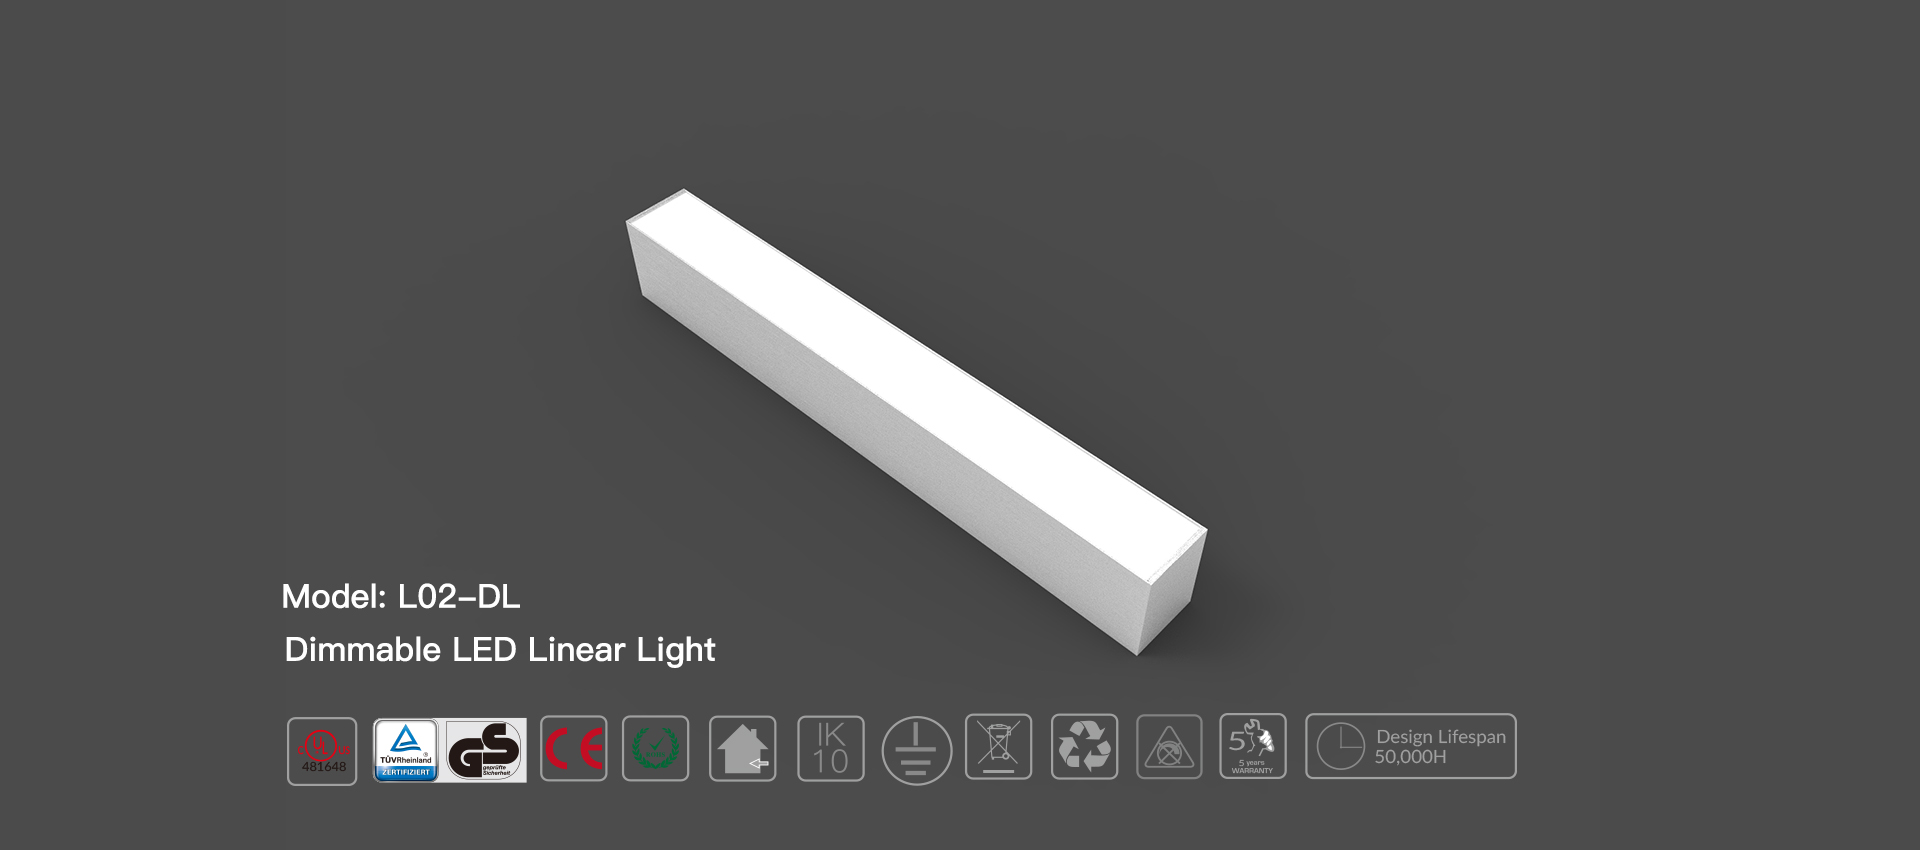 LED Linear Light L02-DL